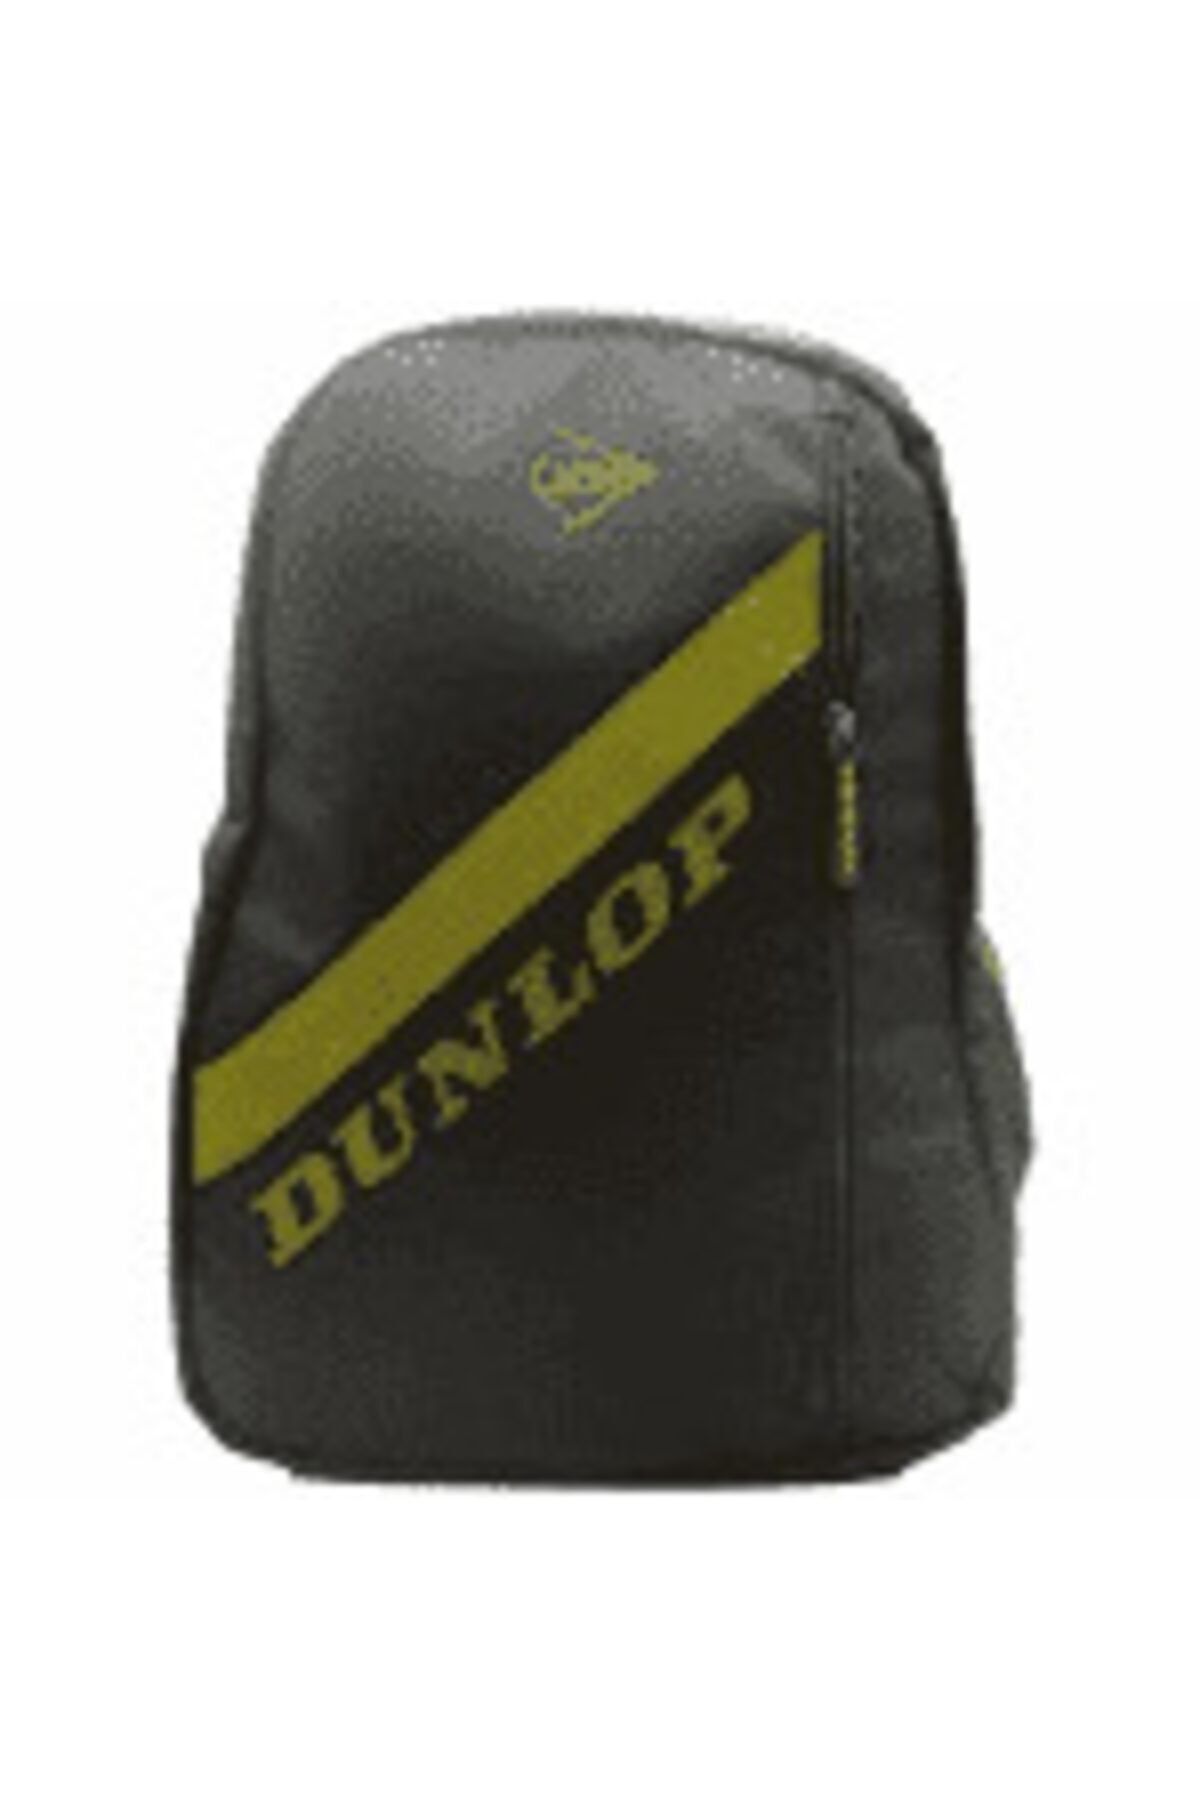 Dunlop Okul Çanta Since 1868